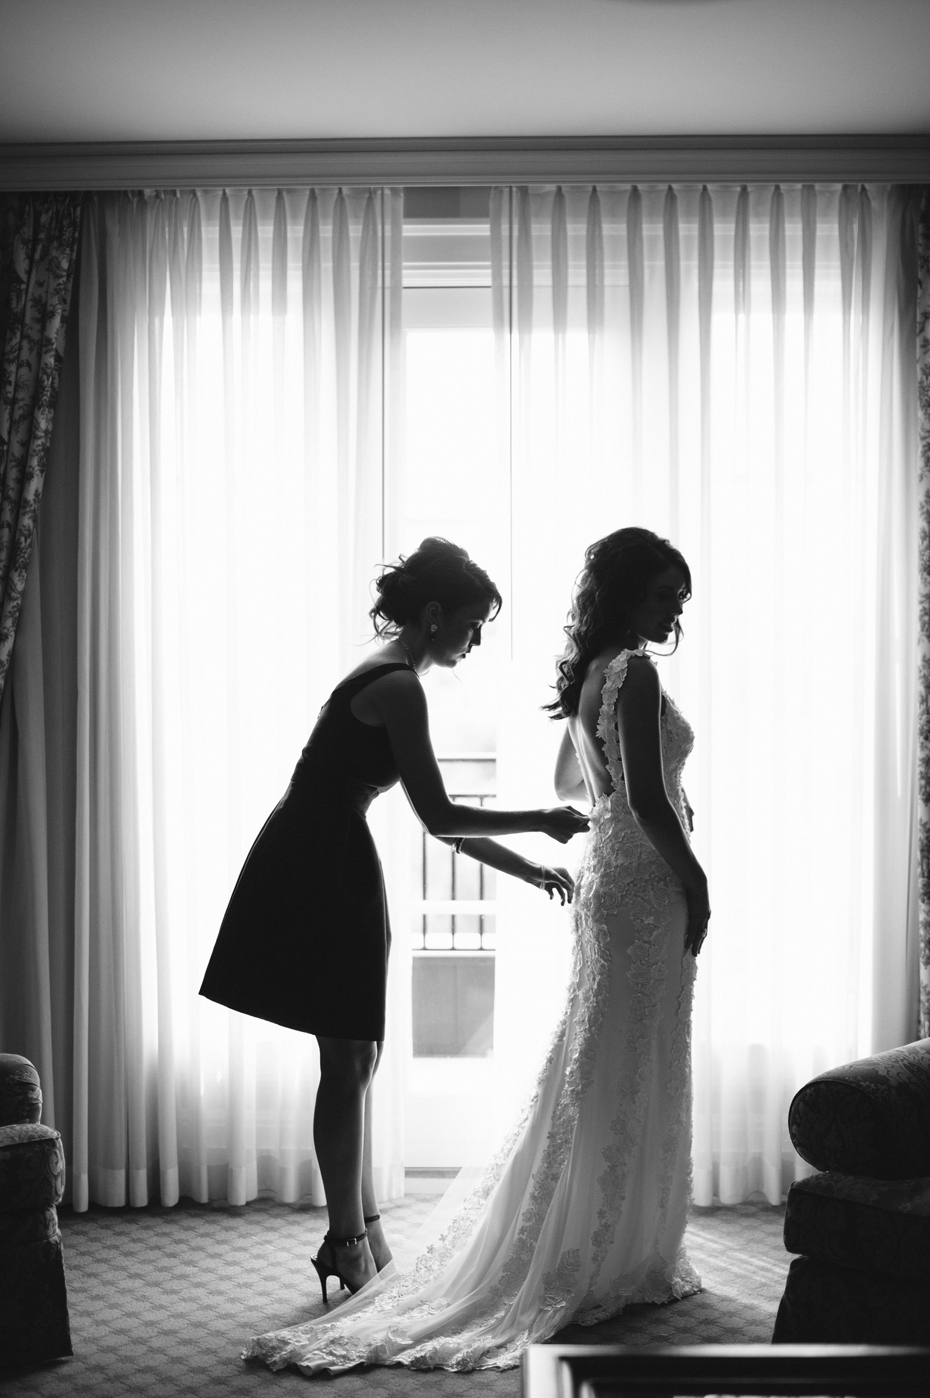 Ann Arbor wedding photographer Heather Jowett presents her best photographs from 2013.